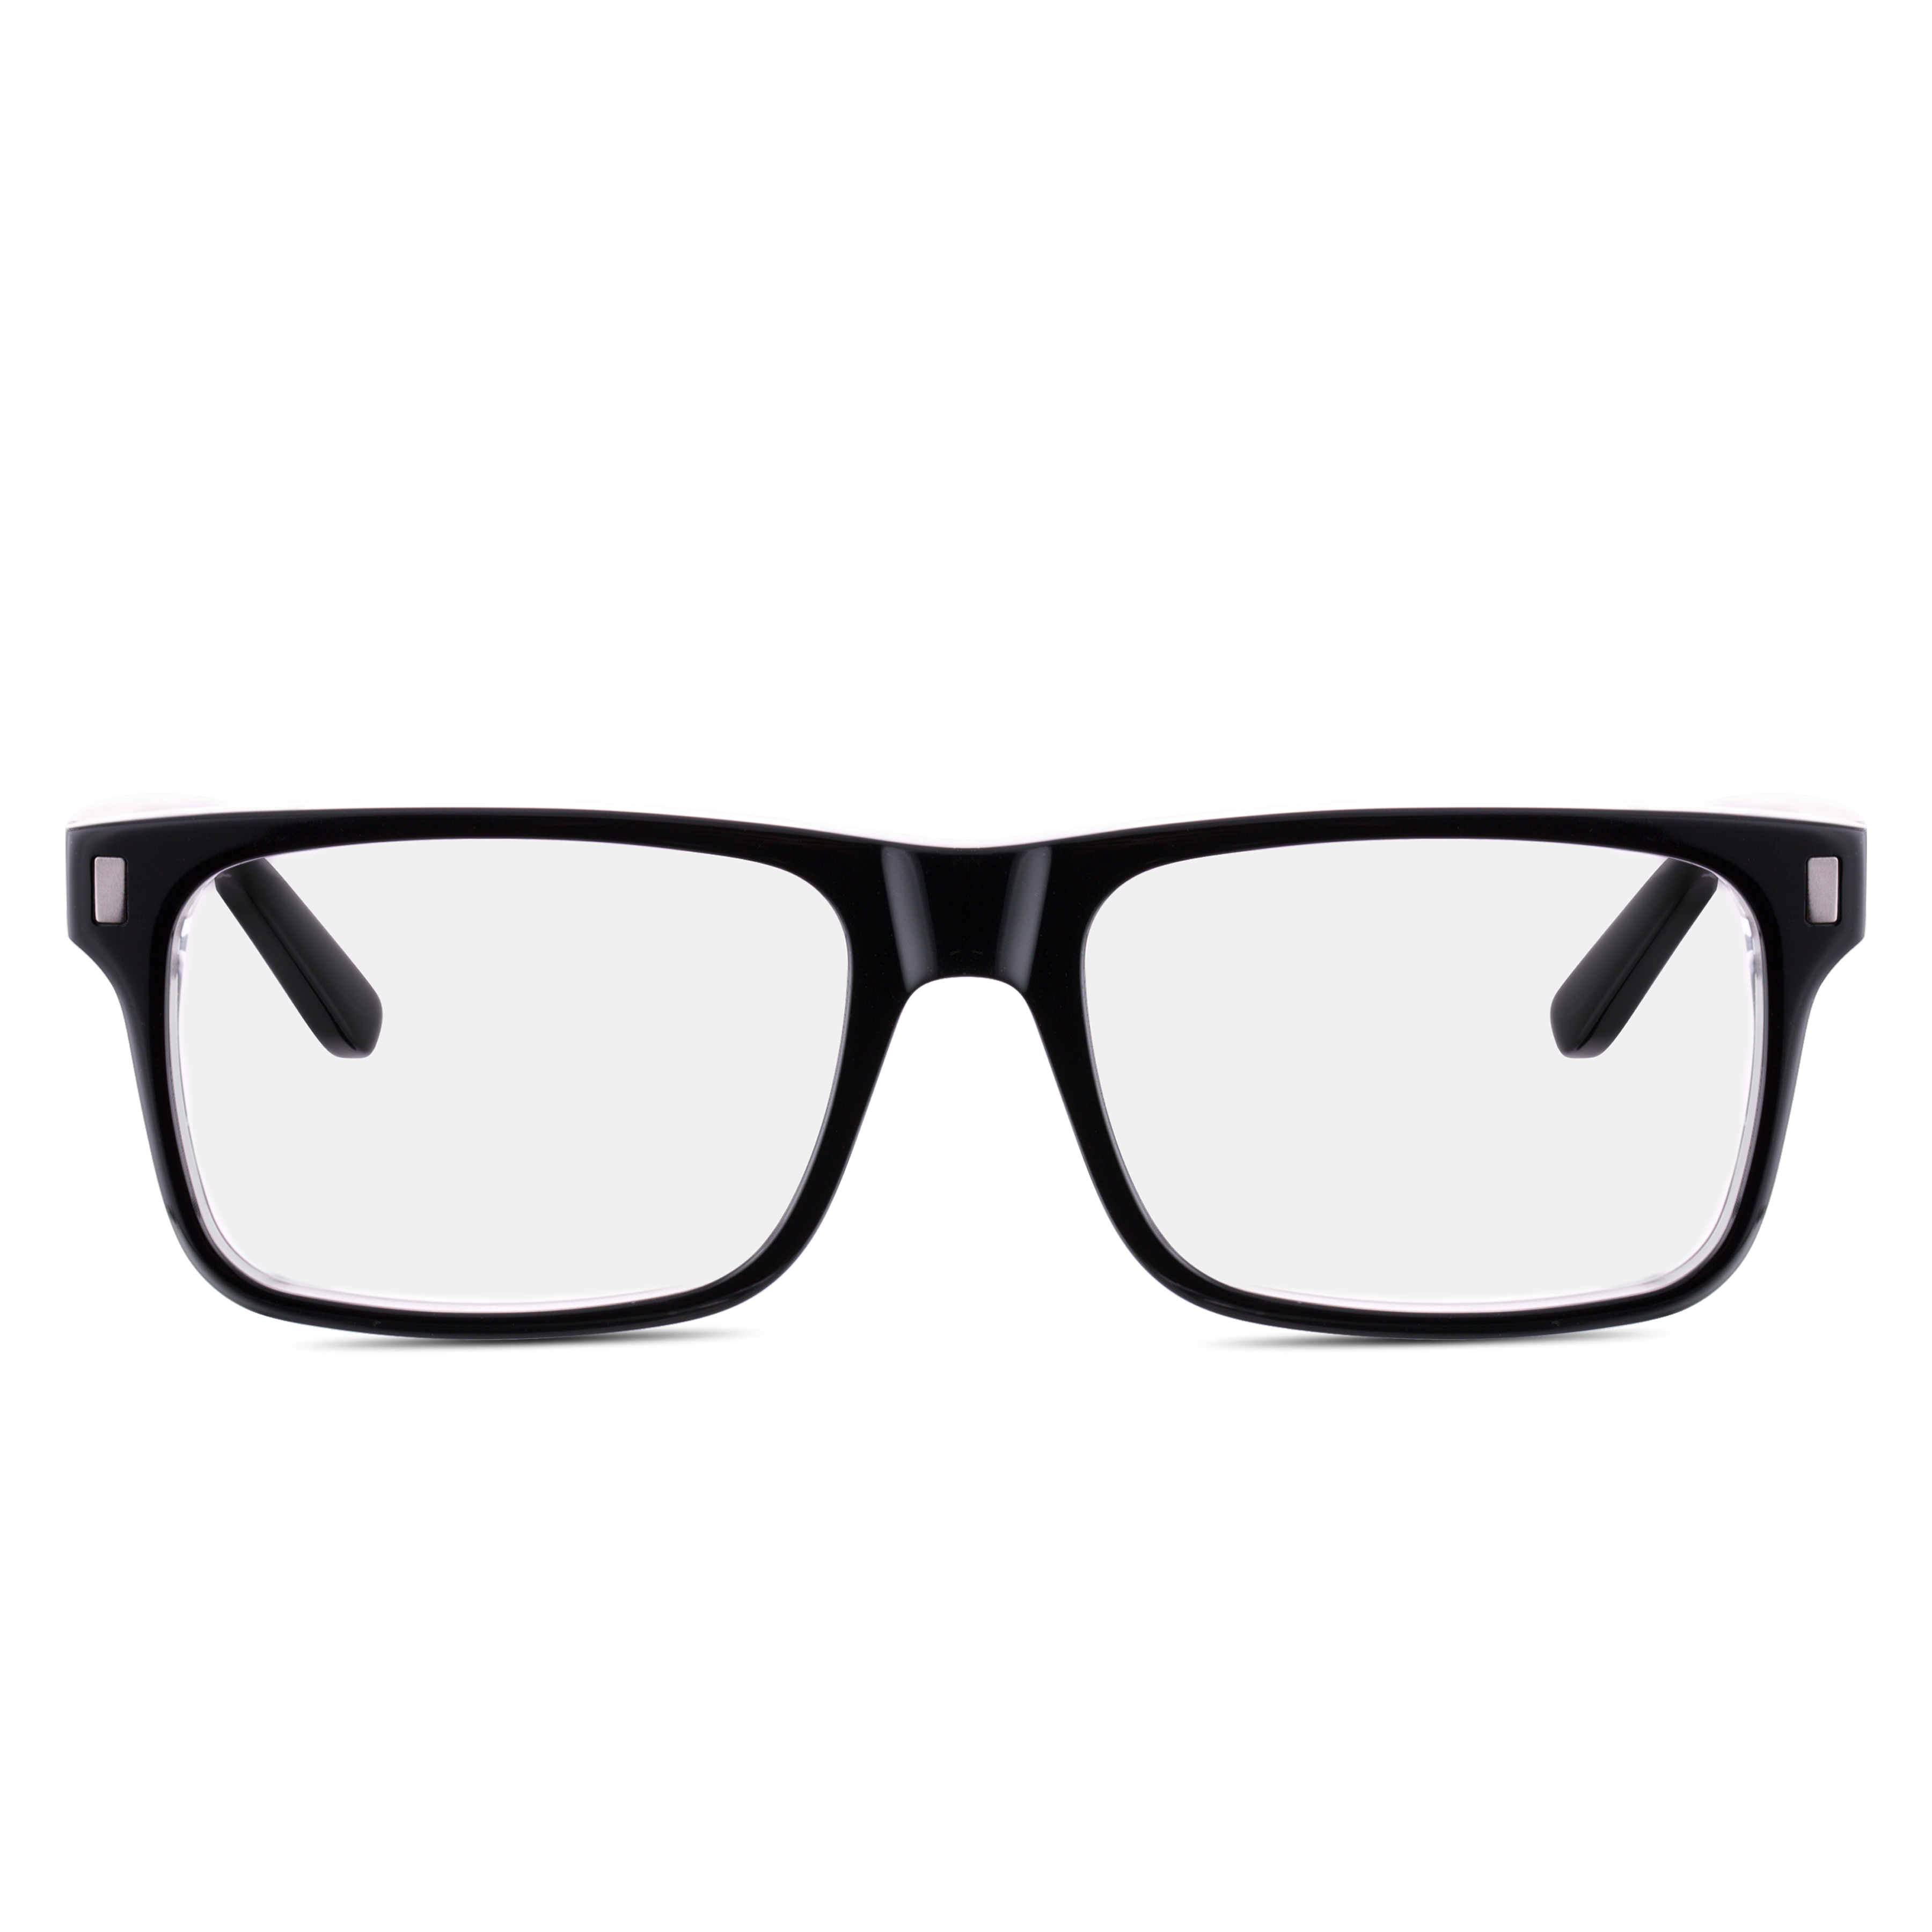 7FIFTY7 - Black Crystal - Eyeglasses Frame - Johnny Fly Eyewear | 